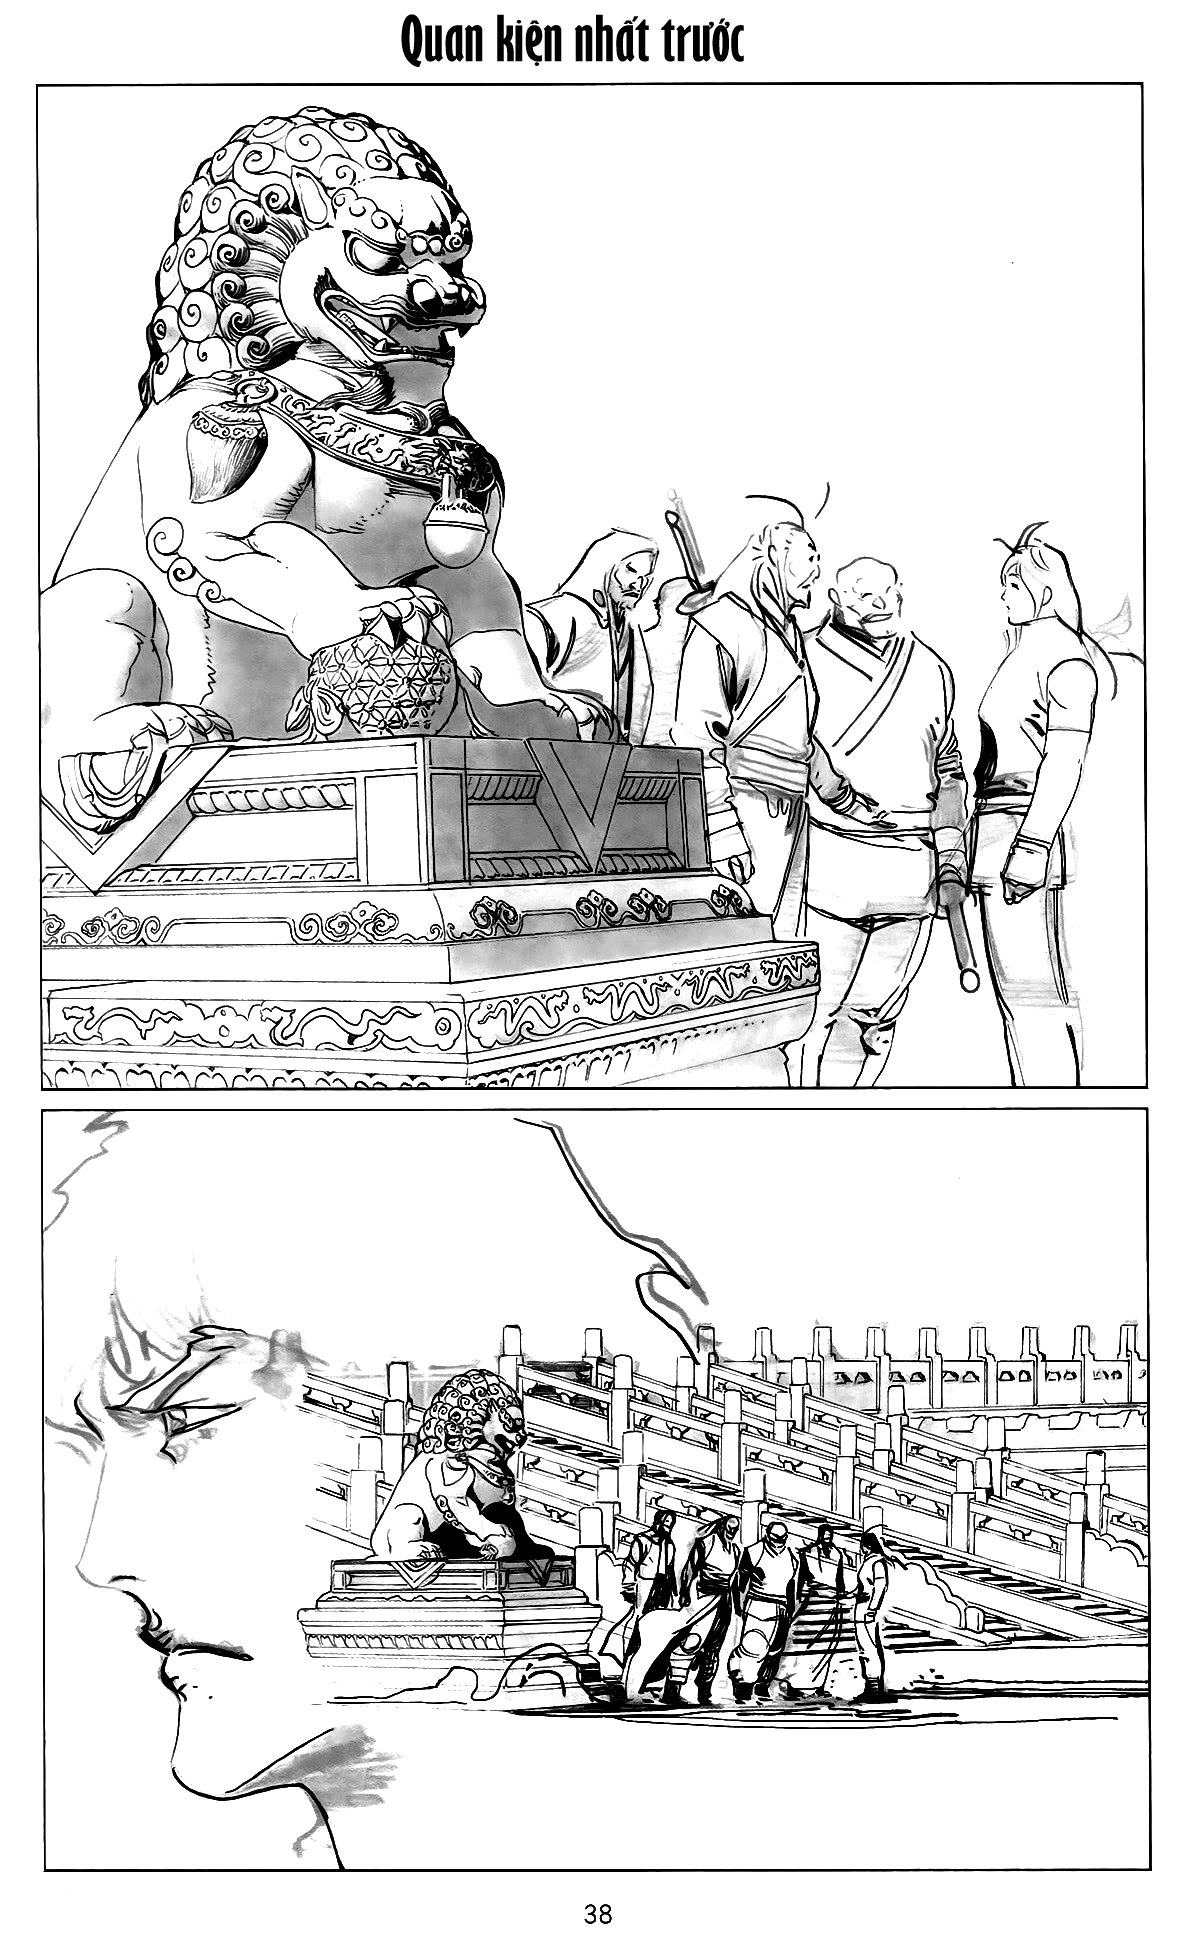 Phong Vân chap 675 (tựa mỗi trang) trang 35